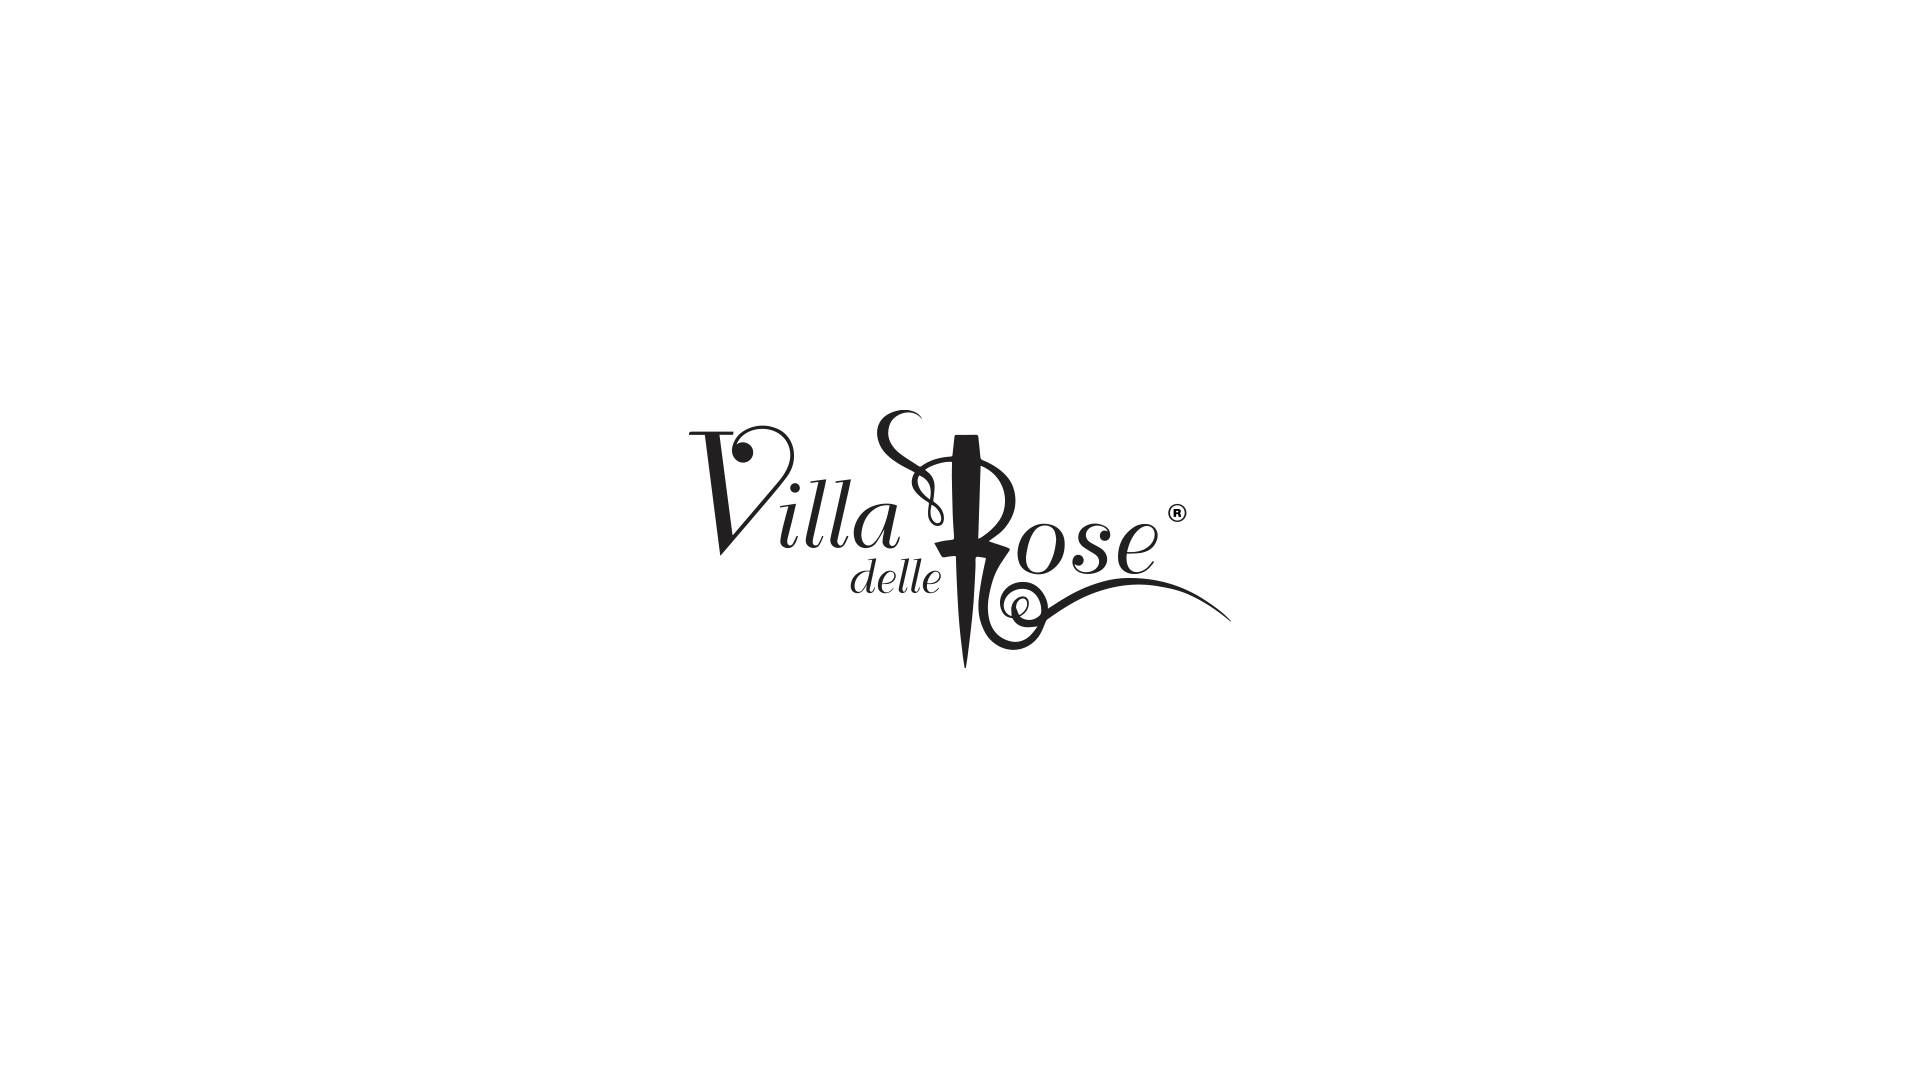 Villa delle Rose, dj Fk Anyway, voice Tanja Monies